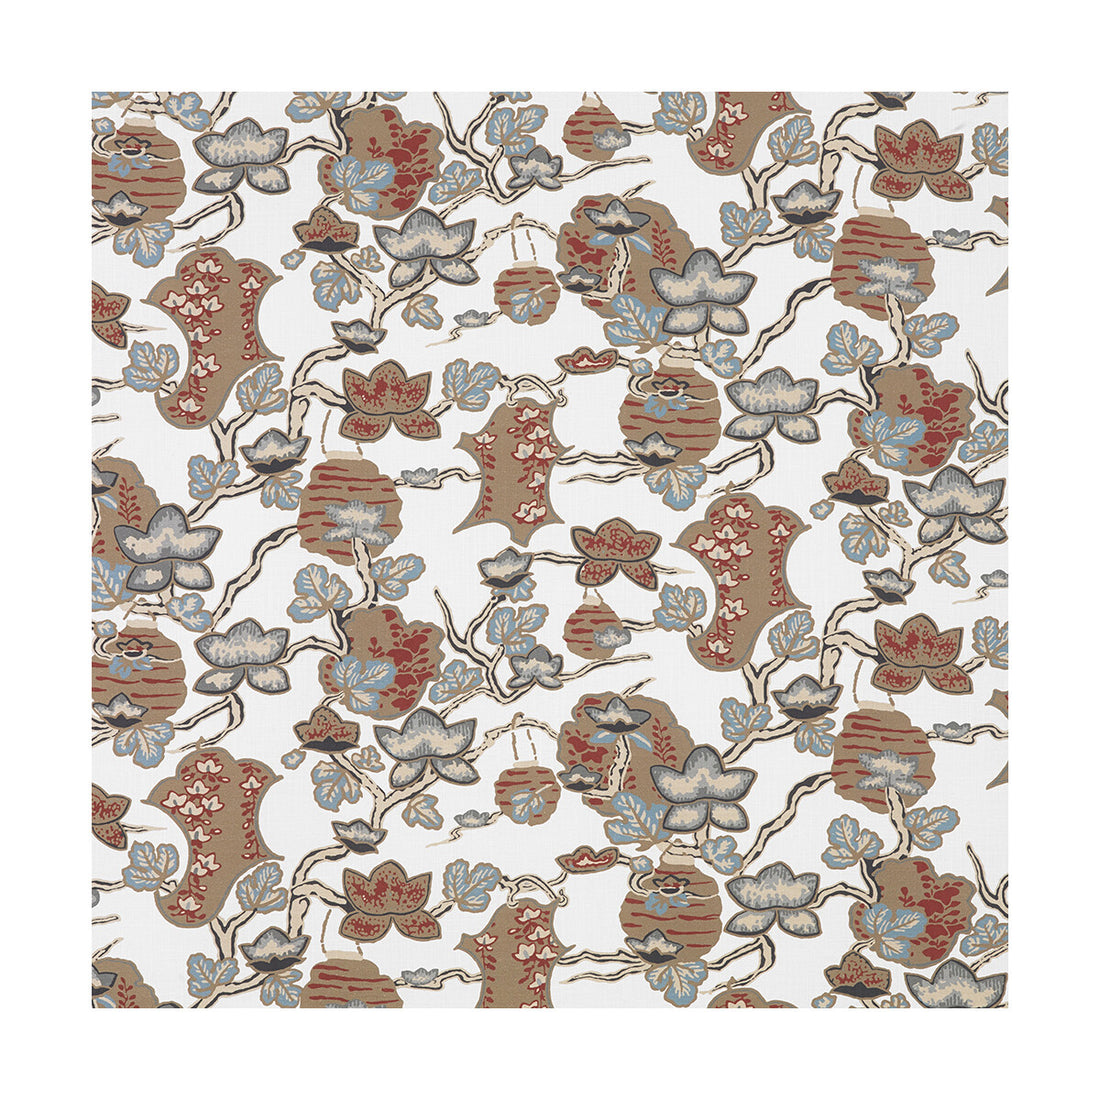 Maria fabric in multi color - pattern LCT5364.001.0 - by Gaston y Daniela in the Lorenzo Castillo III collection